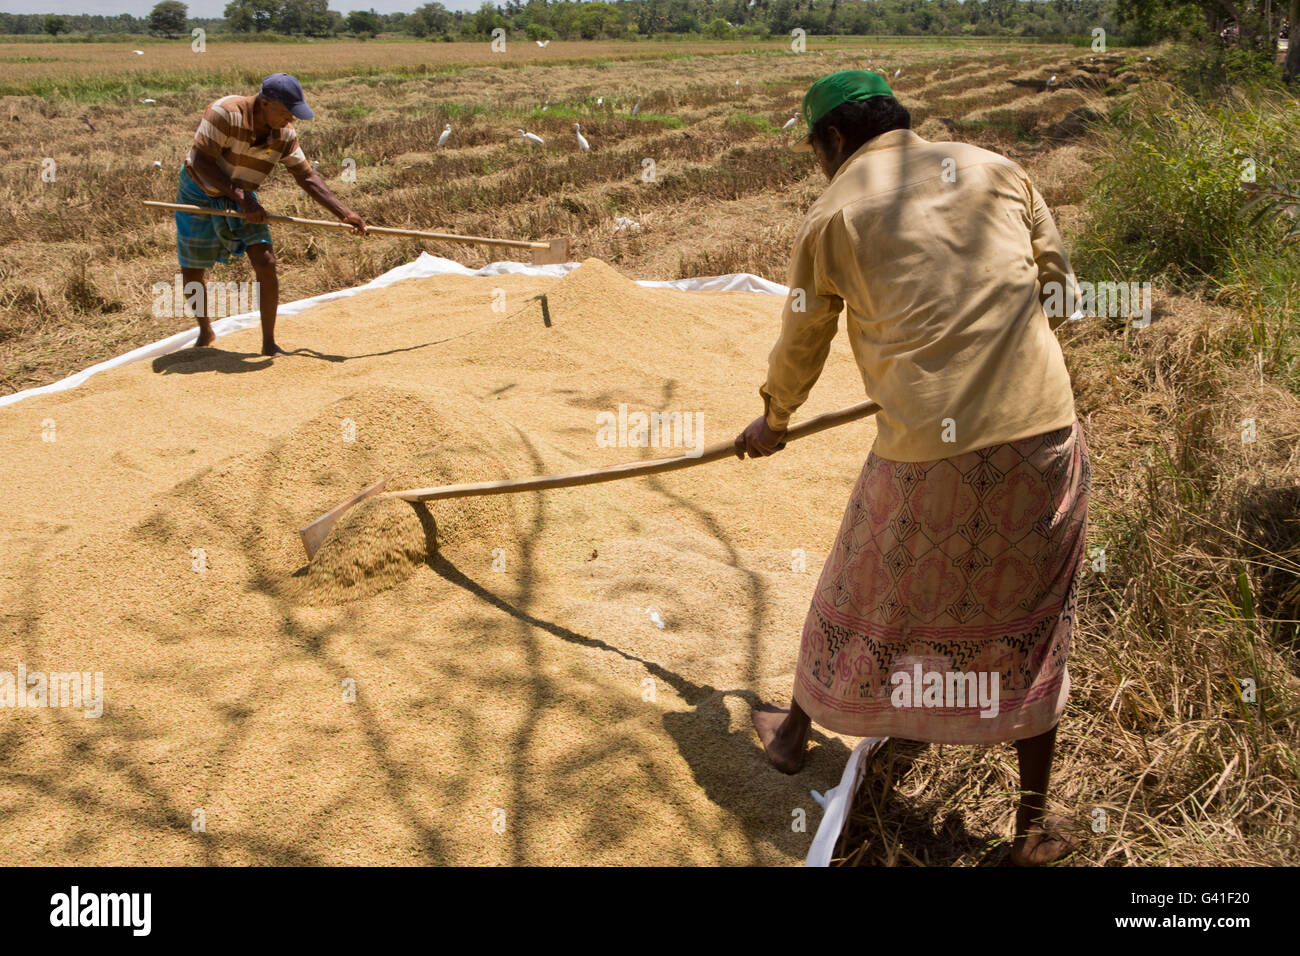 Sri Lanka, Hambantota, man raking pile of harvested rice to dry Stock Photo